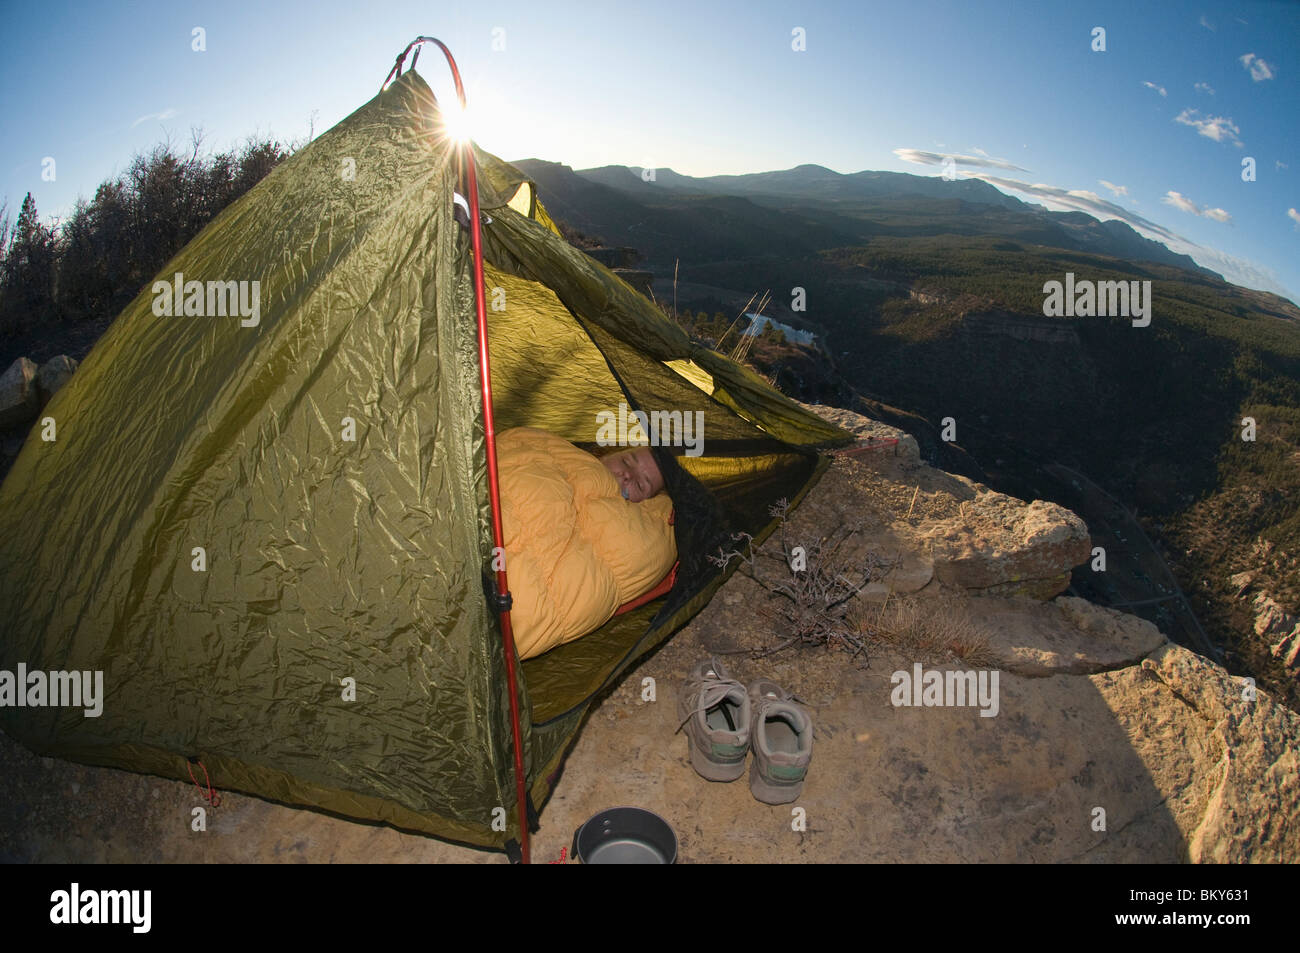 A woman in tent in sleeping bag at sunset on Animas Mountain, Durango, Colorado. Stock Photo